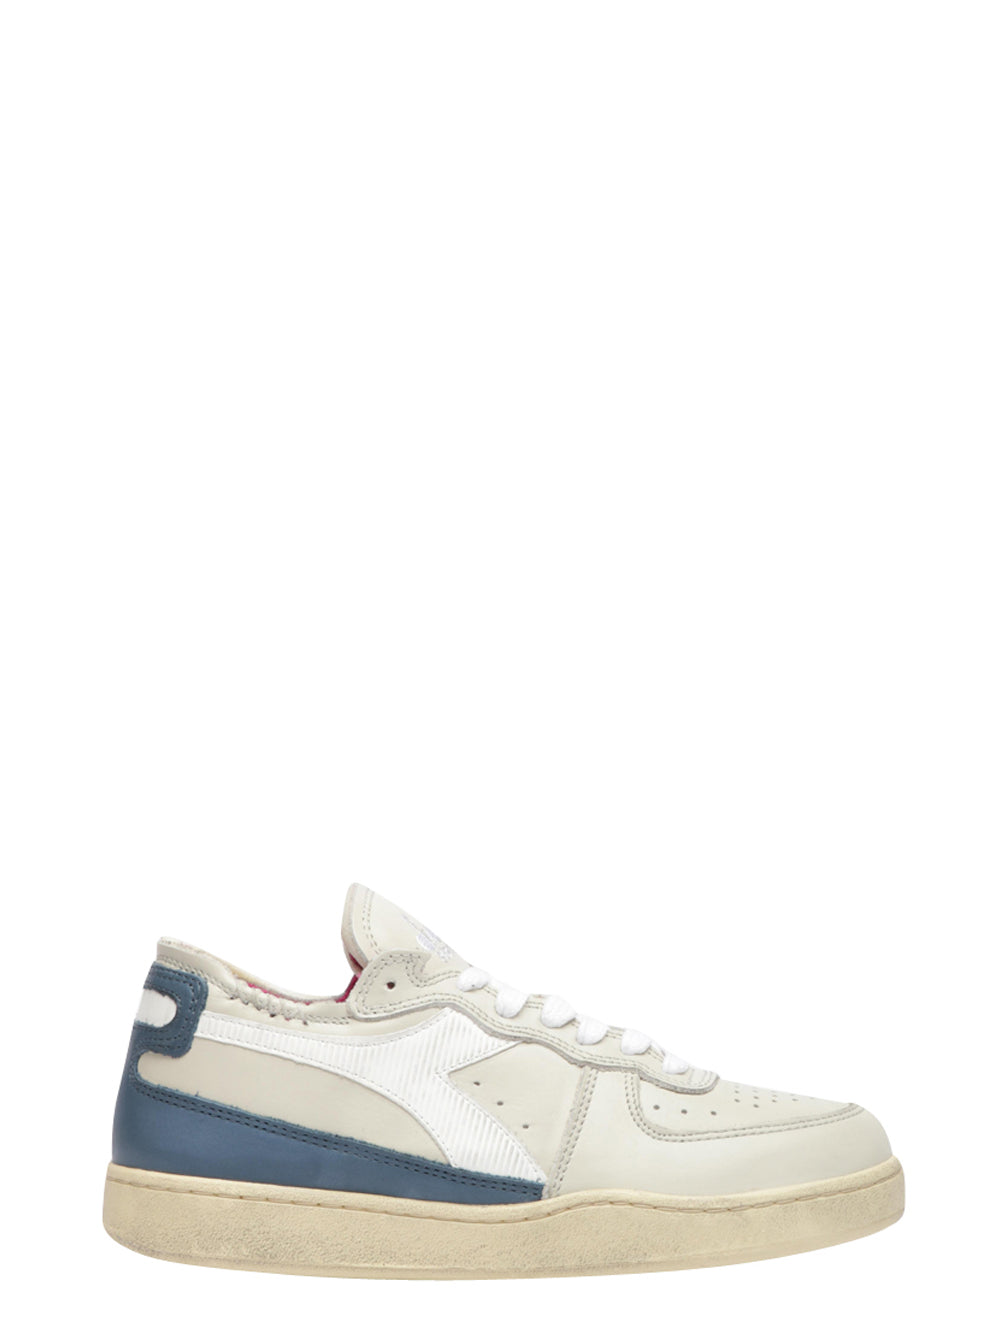 DIADORA HERITAGE Scarpe Sneakers Mi Basket Row Cut in Pelle Ghiaccio e Blu Grigio/avion